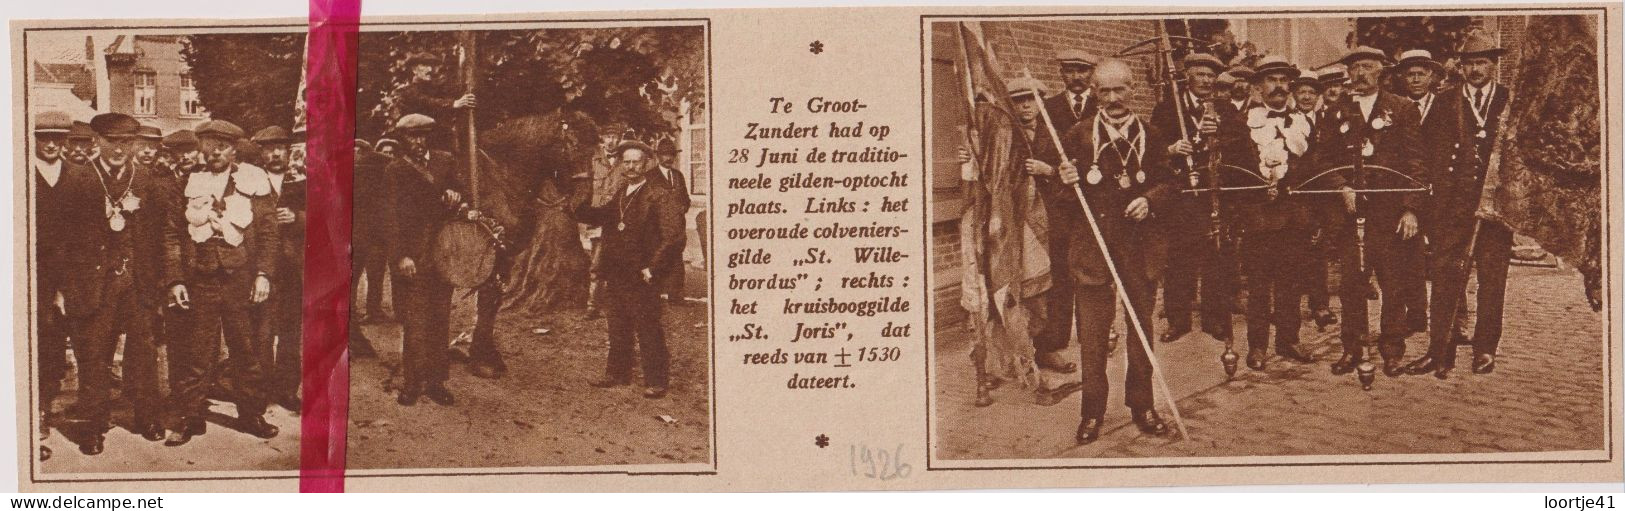 Zundert - Deelnemers Optocht Gilden - Orig. Knipsel Coupure Tijdschrift Magazine - 1926 - Ohne Zuordnung